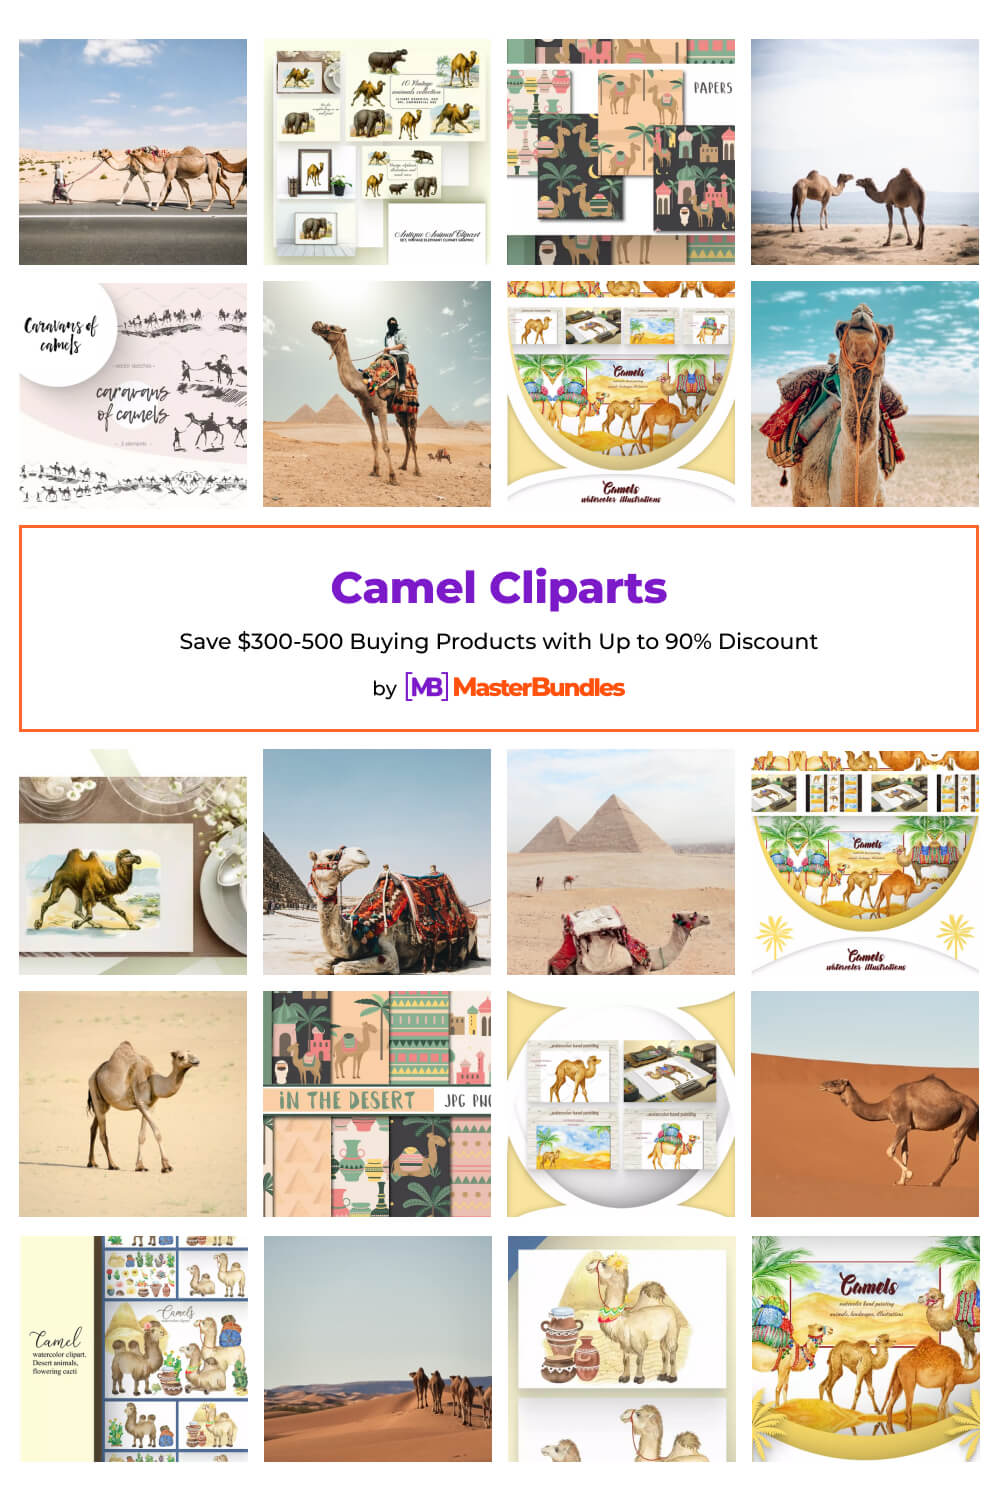 camel cliparts pinterest image.